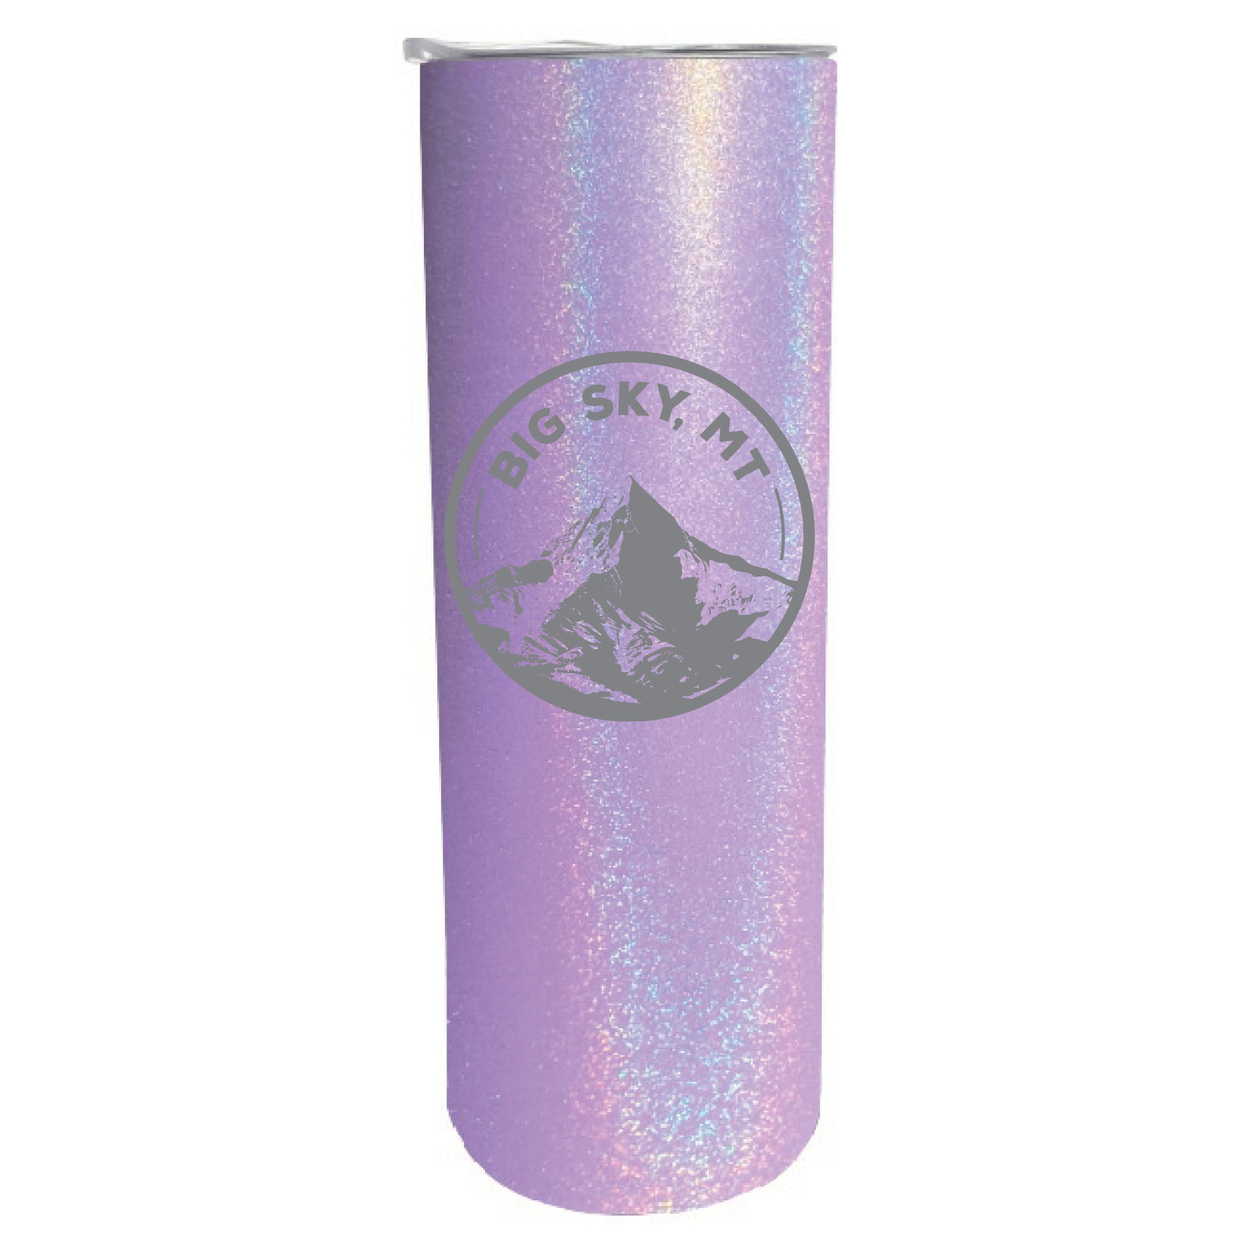 Big Sky Montana Souvenir 20 Oz Engraved Insulated Stainless Steel Skinny Tumbler - Purple Glitter,,4-Pack